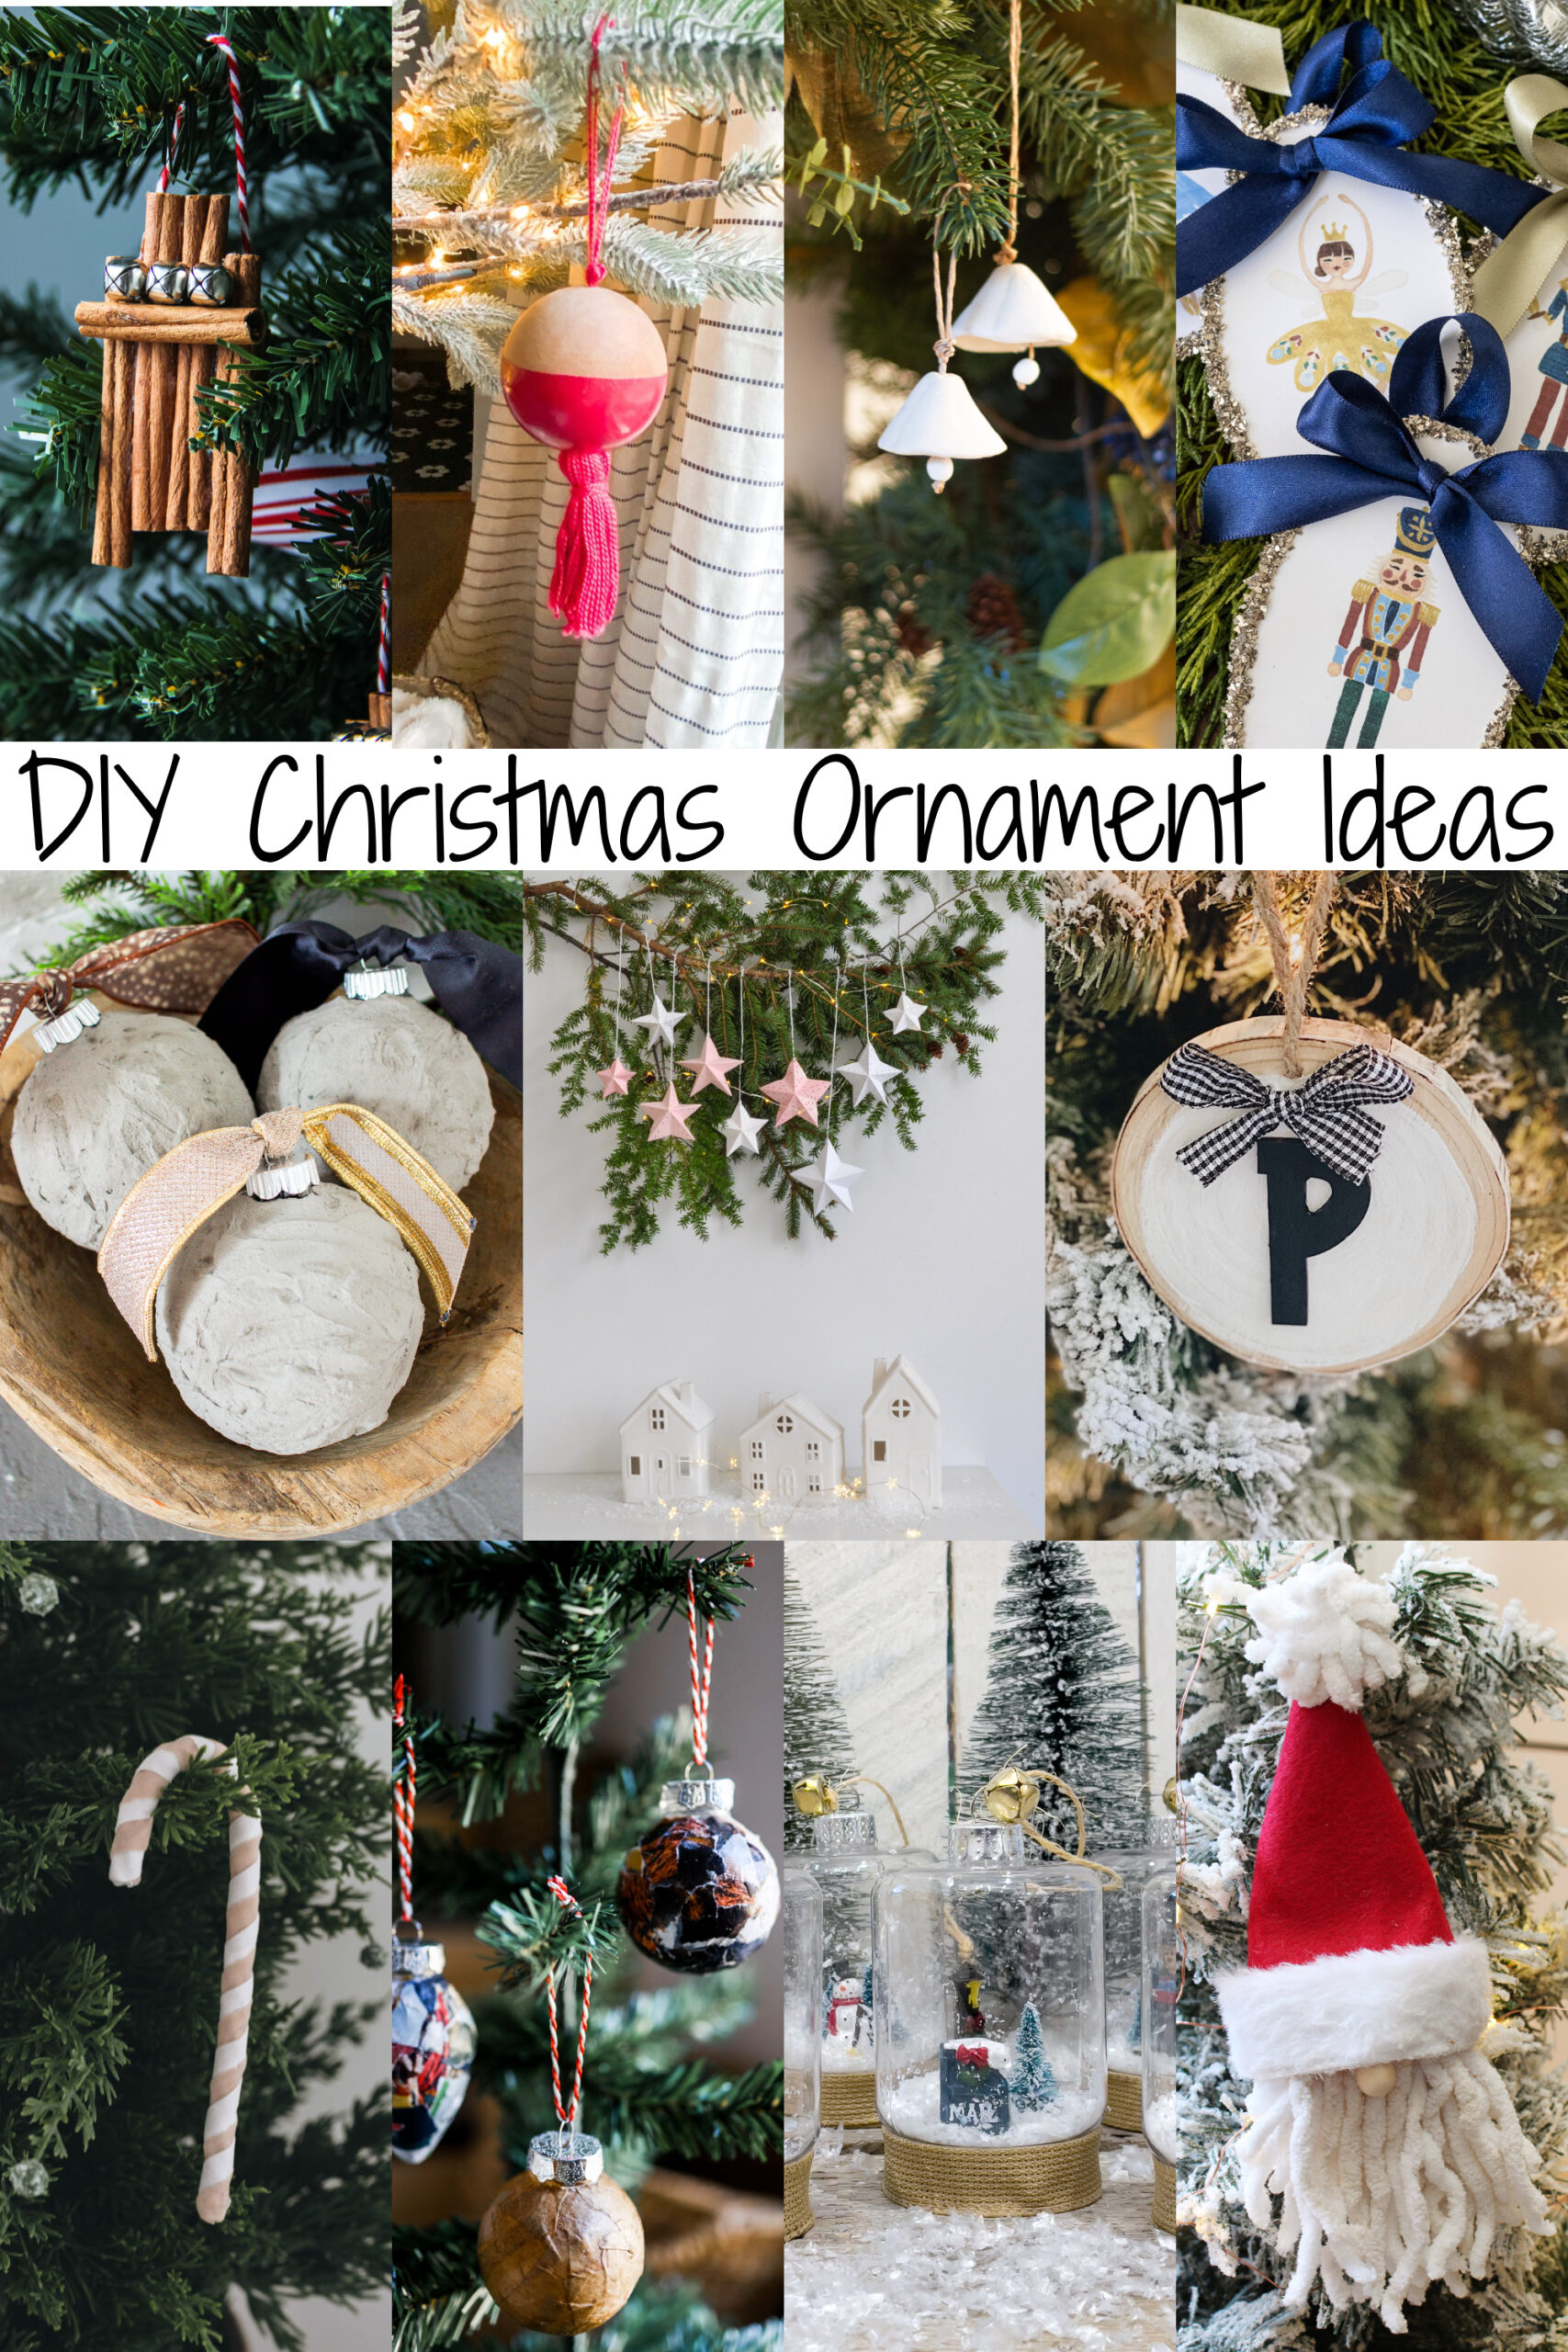 DIY Christmas Ornament Ideas poster.